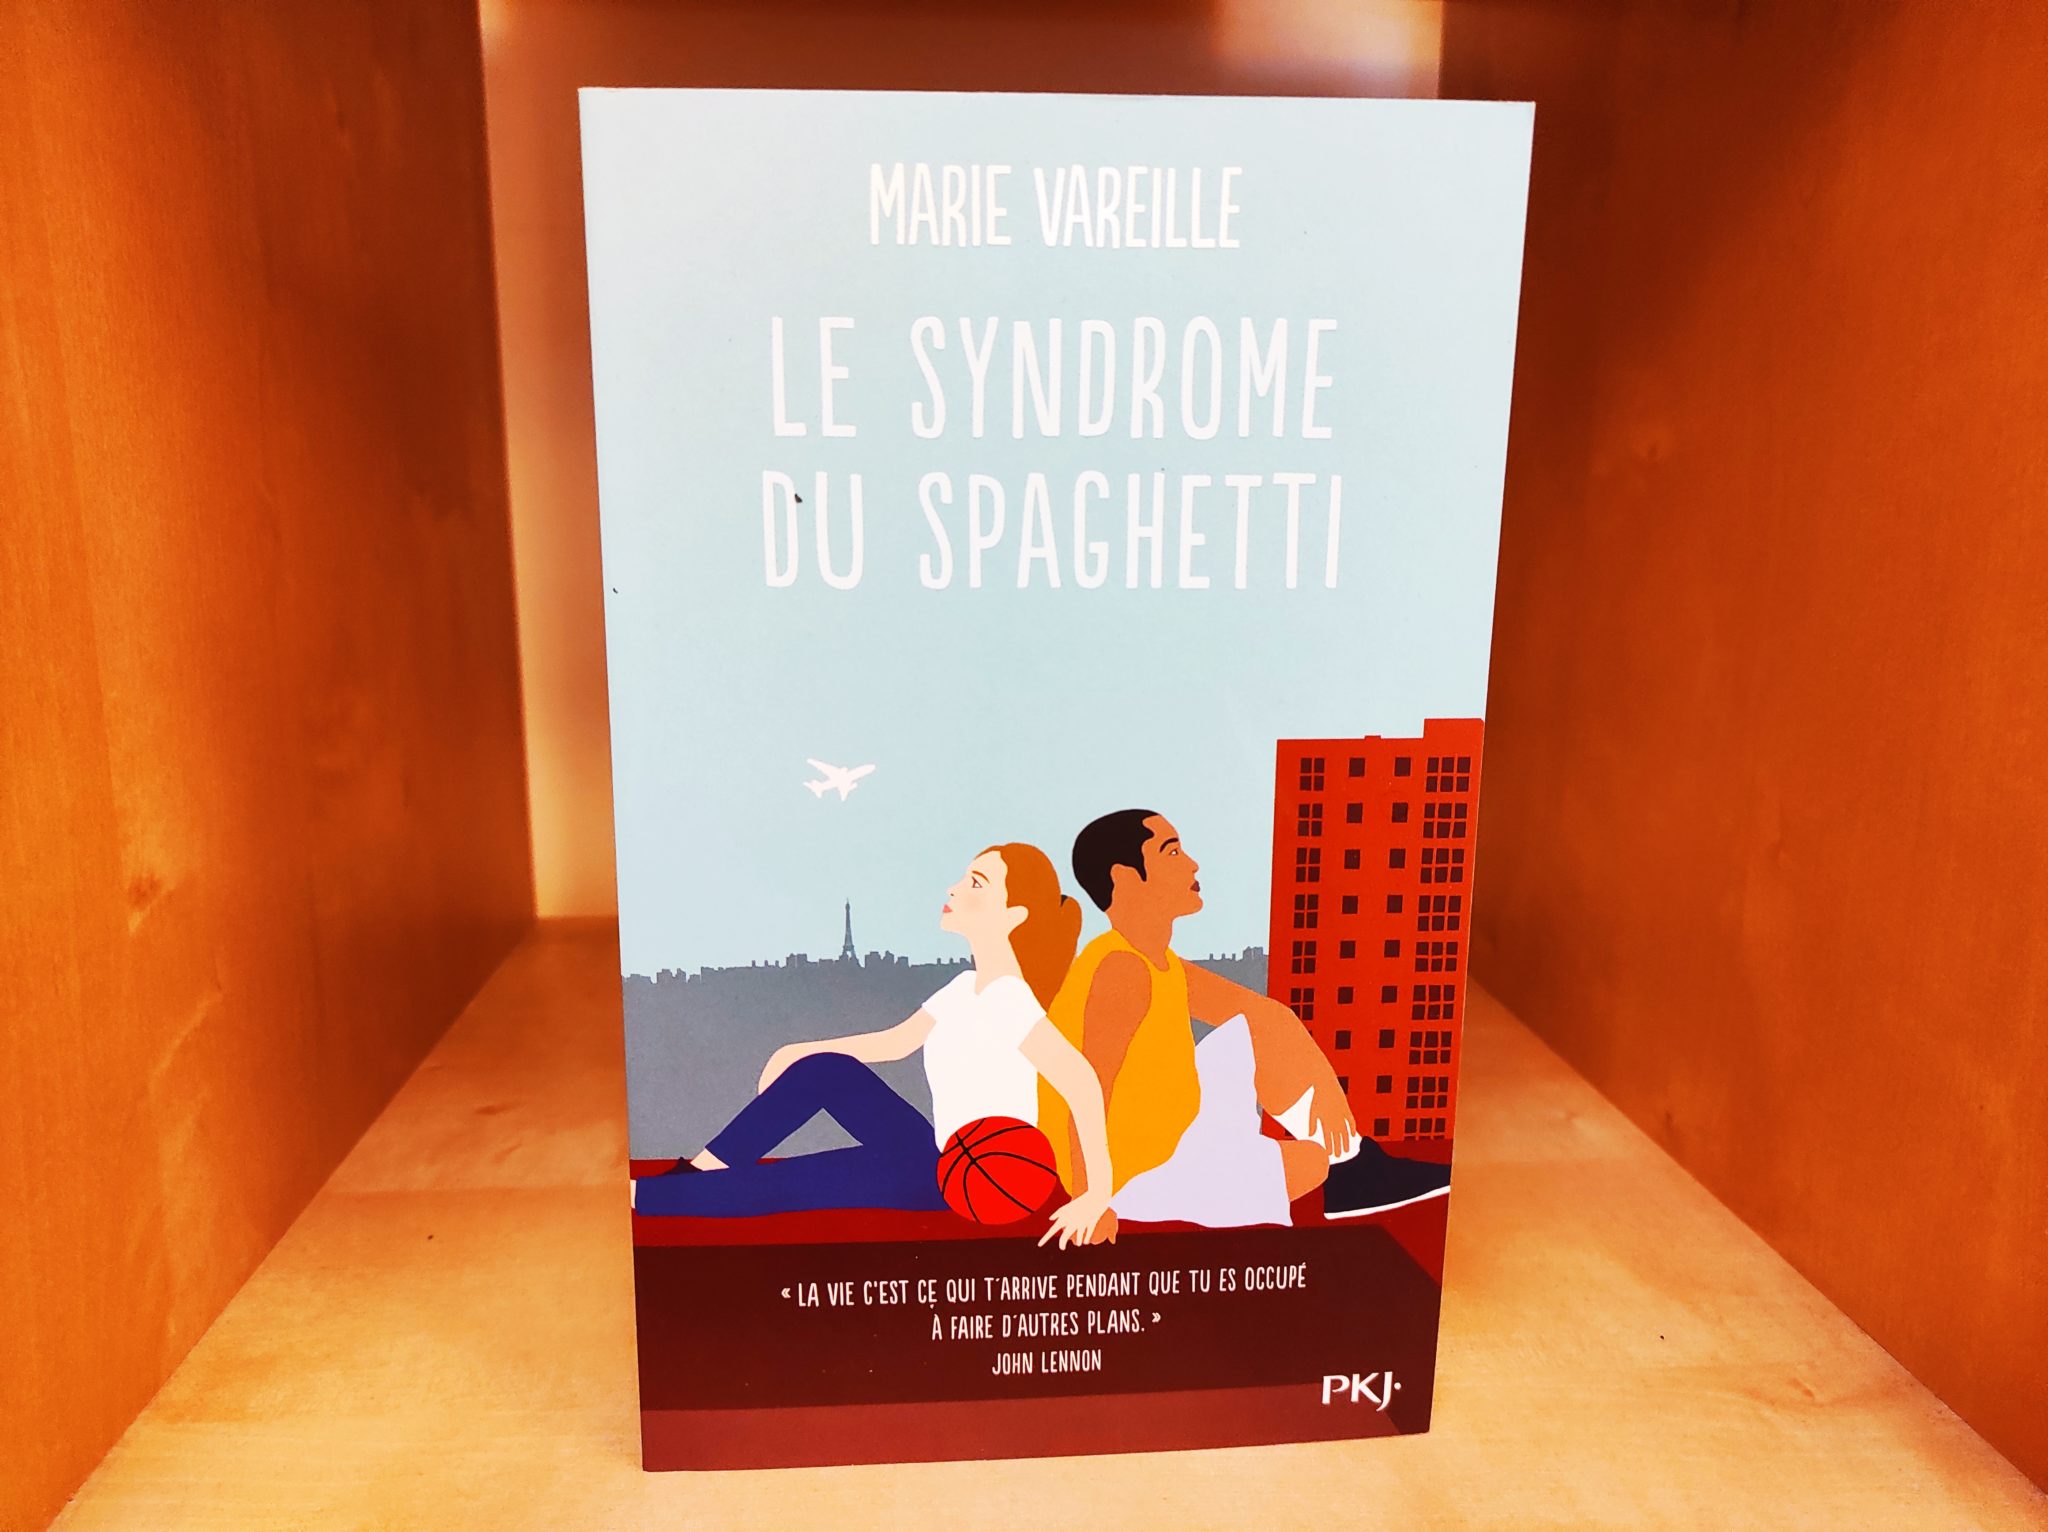 Marie Vareille Le Syndrome du Spaghetti